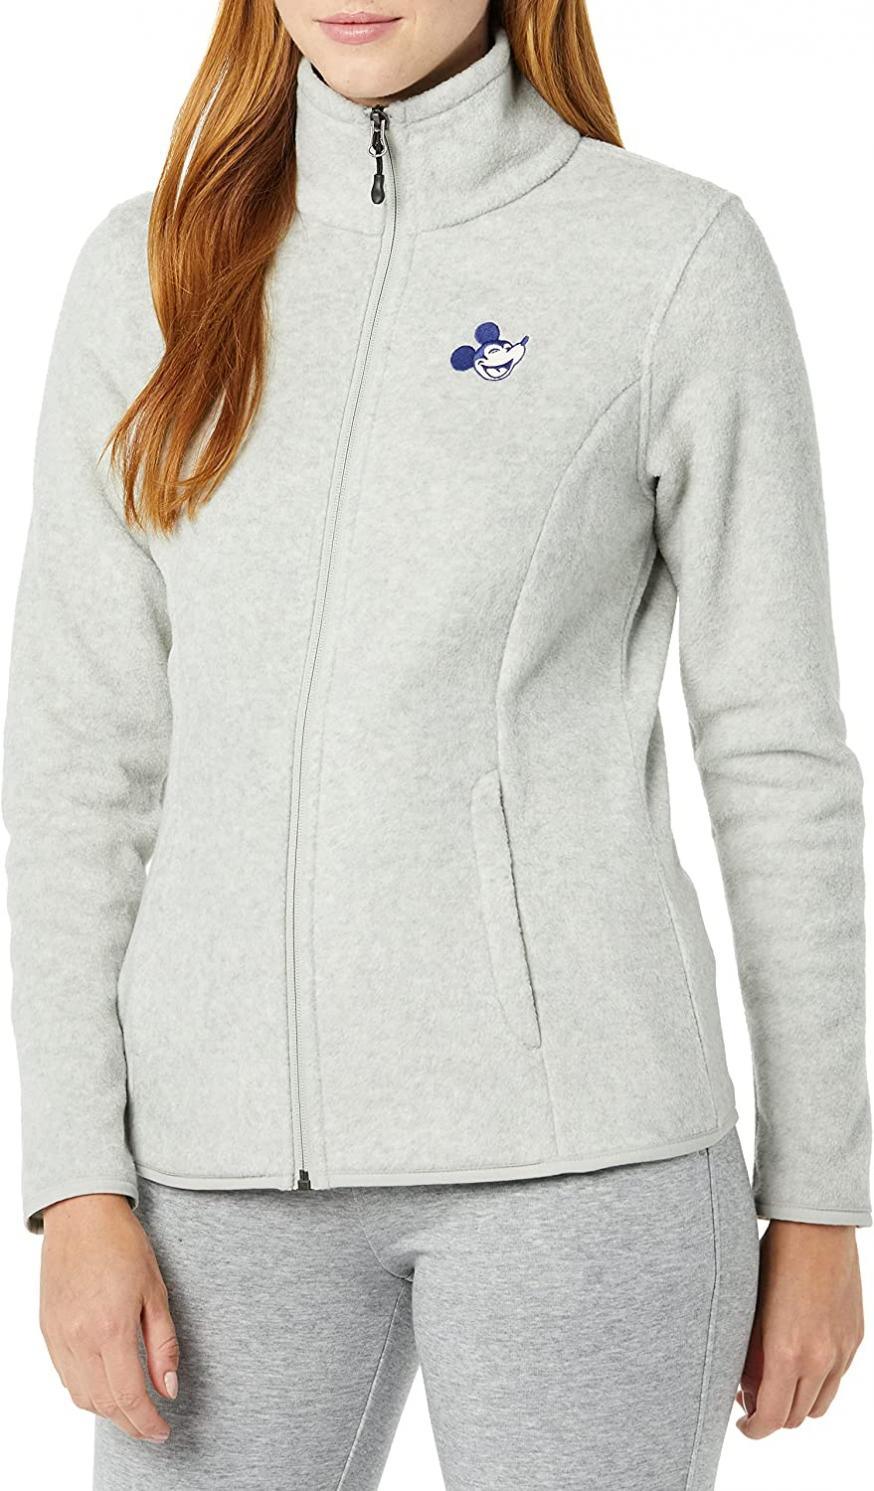 Amazon Essentials Disney | Marvel | Star Wars Women's Polar Fleece Full-Zip Mock Jackets